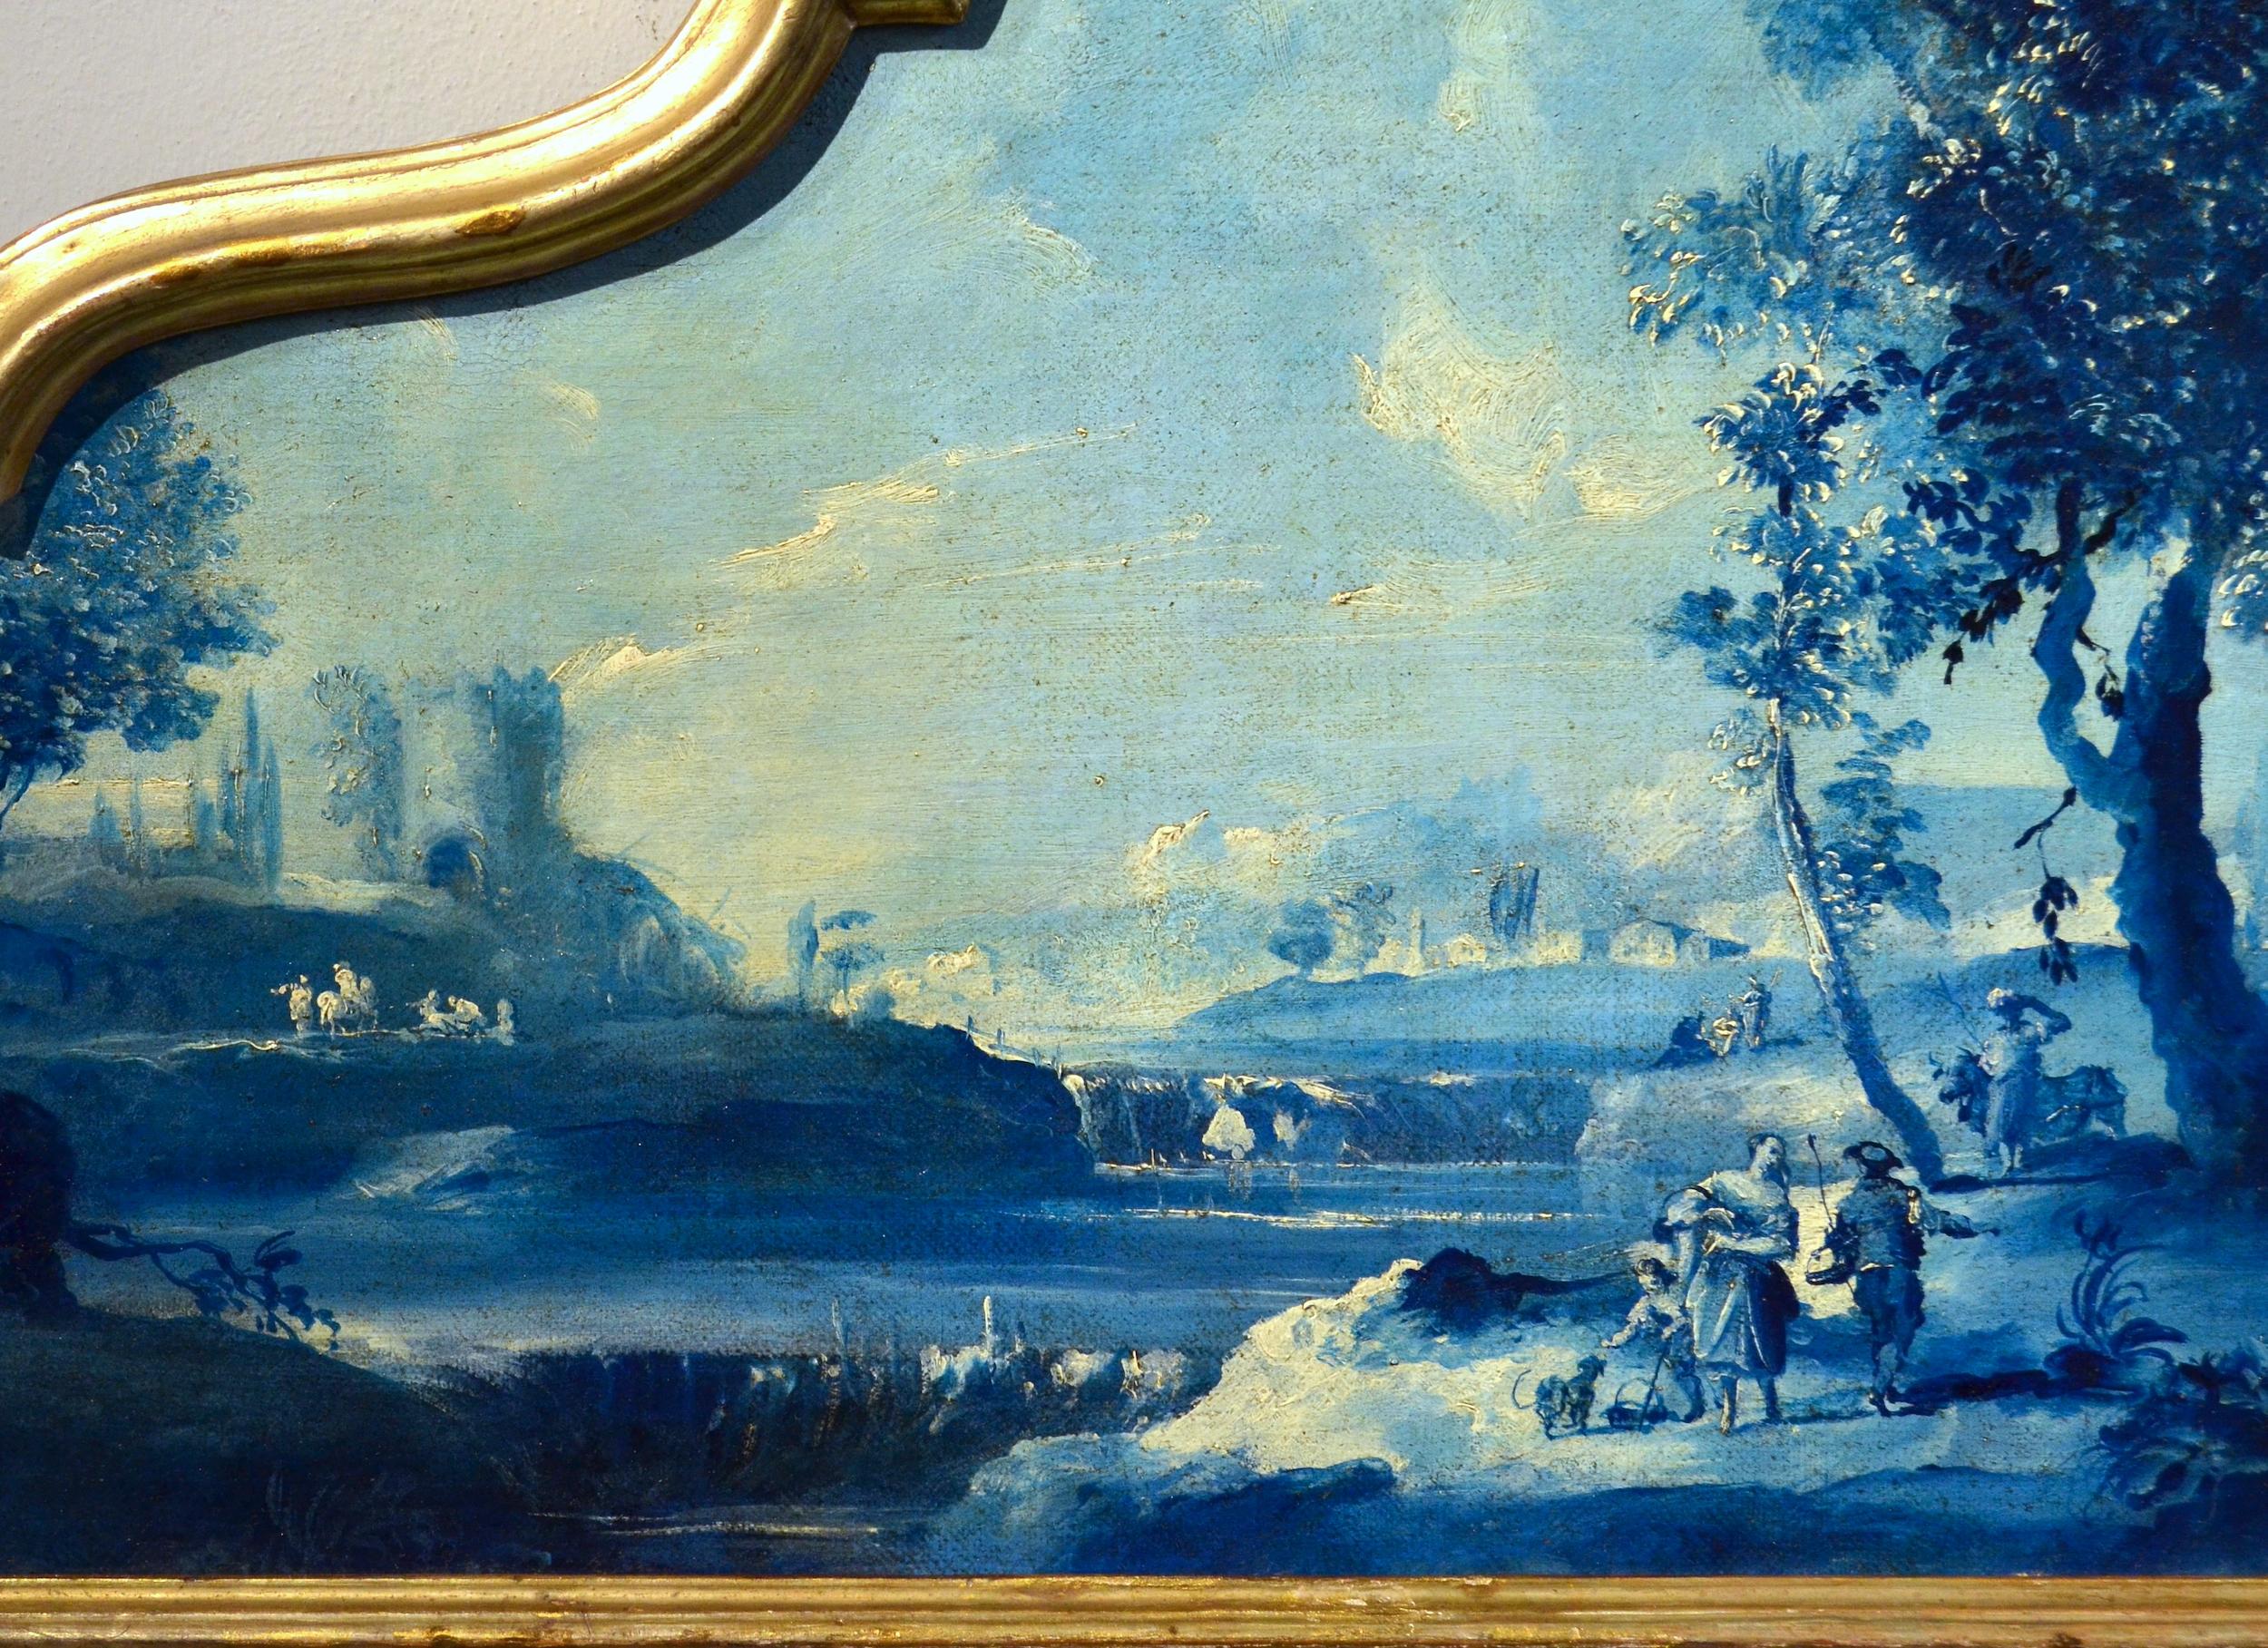 Paint Oil on canvas Pair Landscape Wood See Lake Venezia Italy Baroque Ricci Art 1